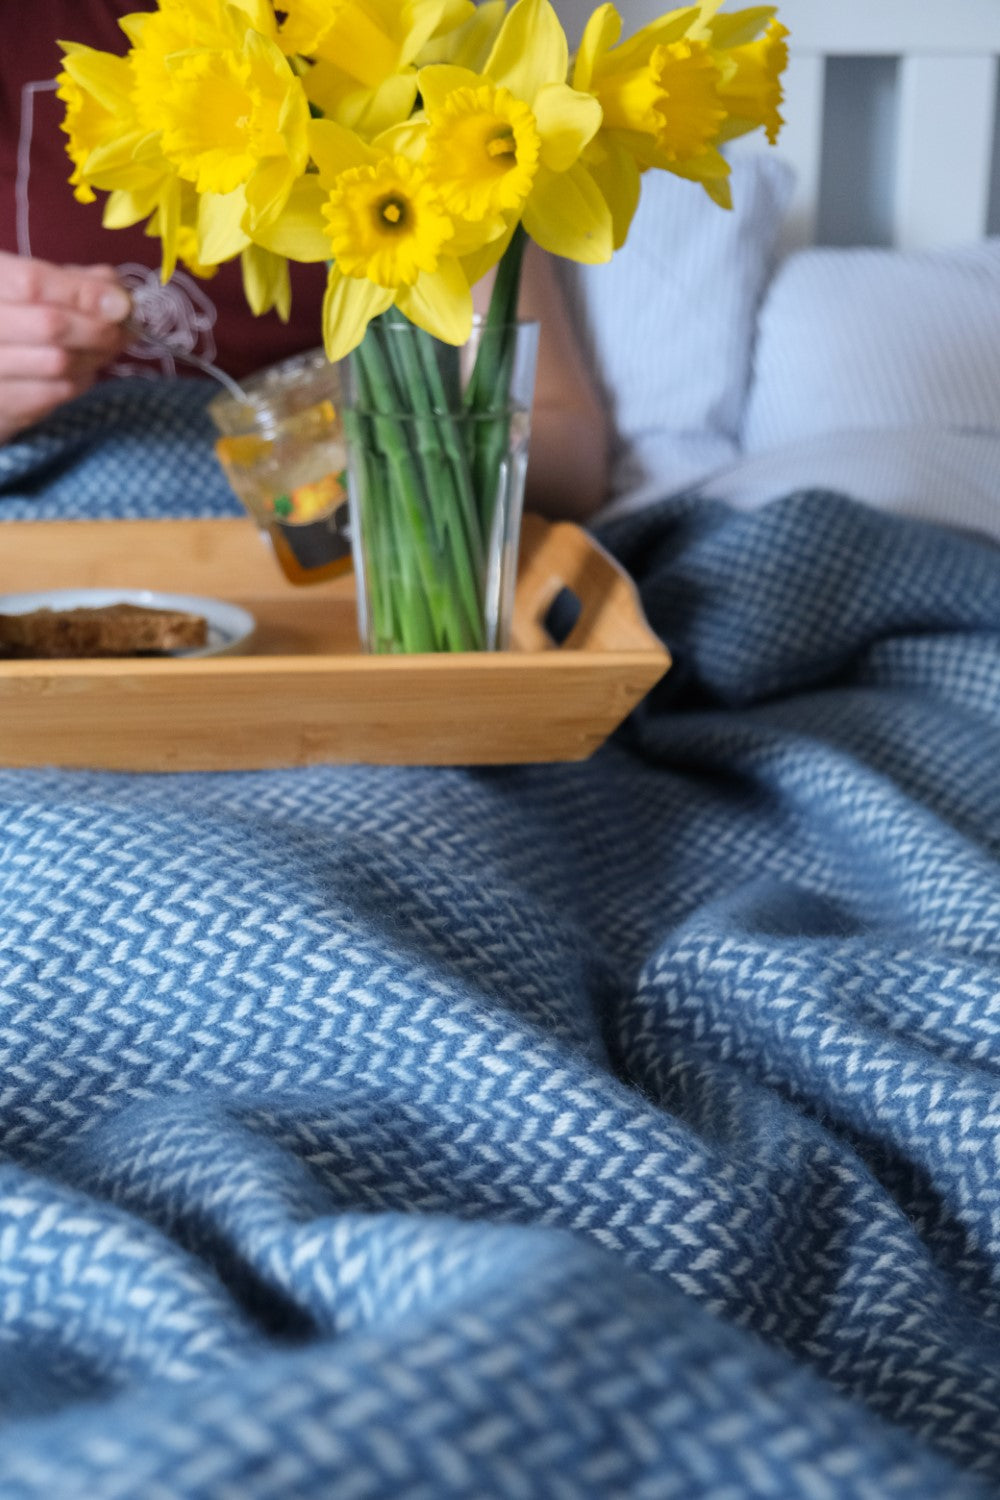 A person having breakfast in bed while underneath a blue herringbone wool blanket.